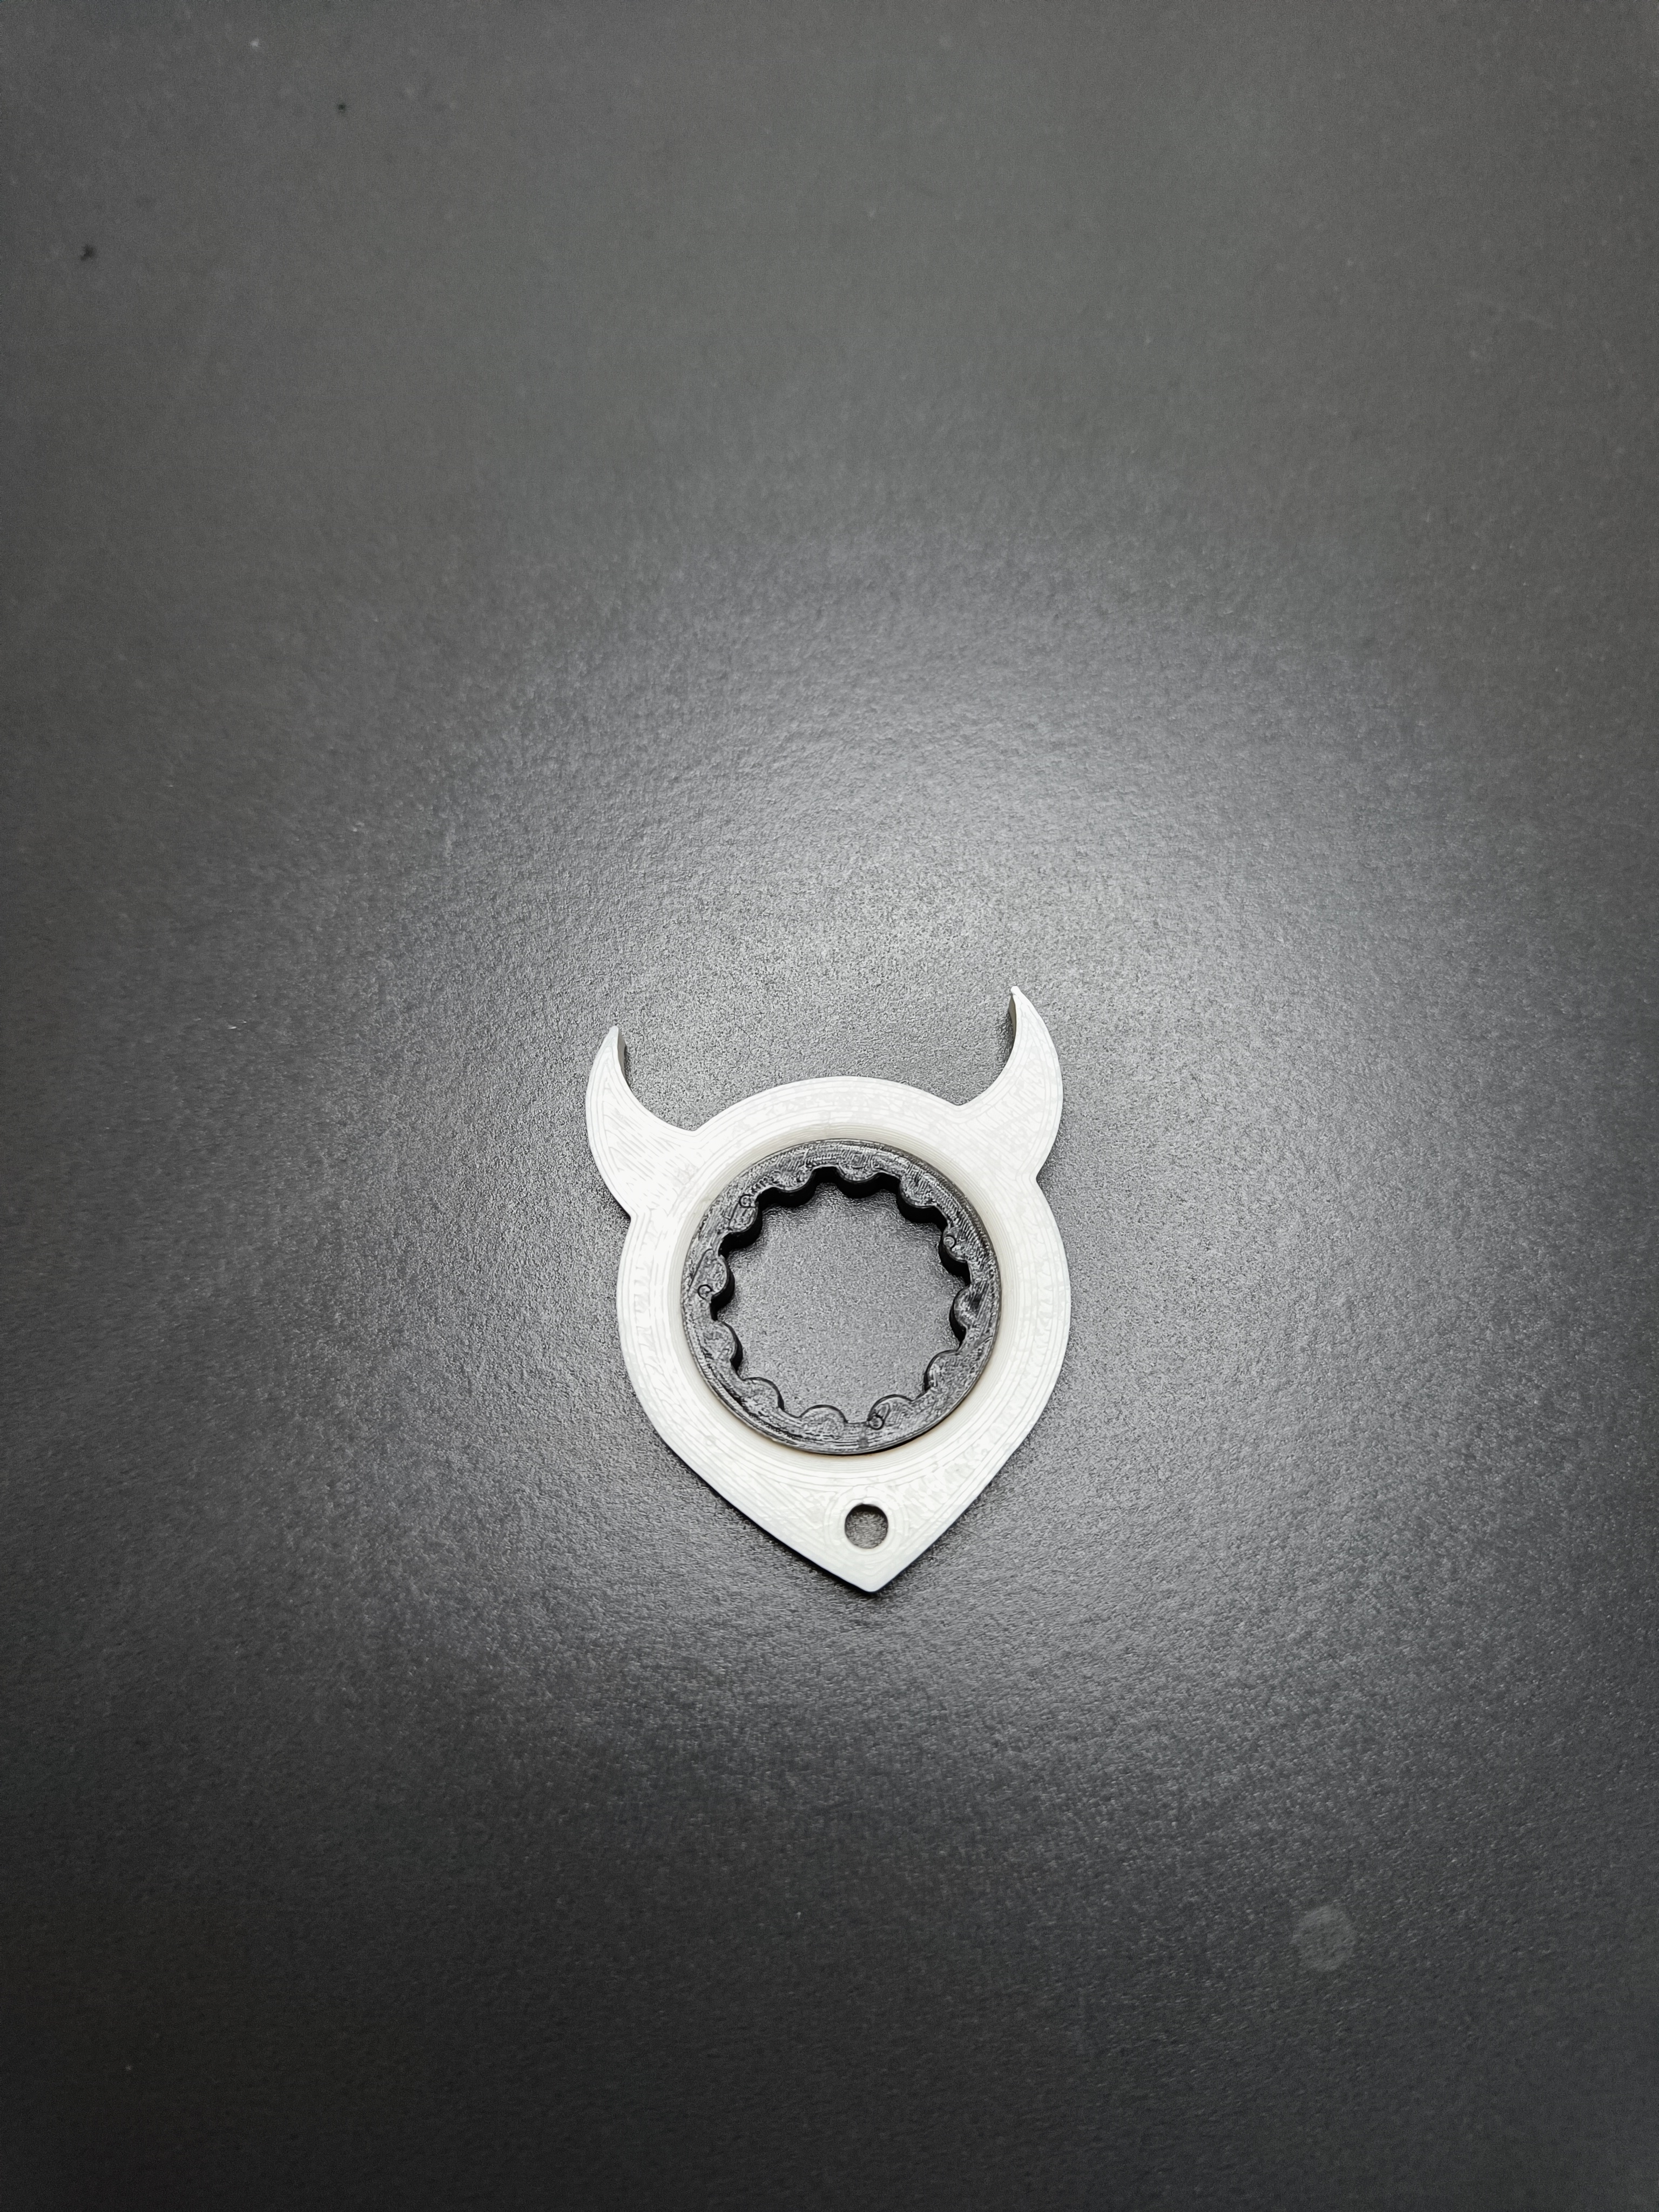 Karambit Keychain Spinner Tiktok No Bearing Keyrambit 3D model 3D printable